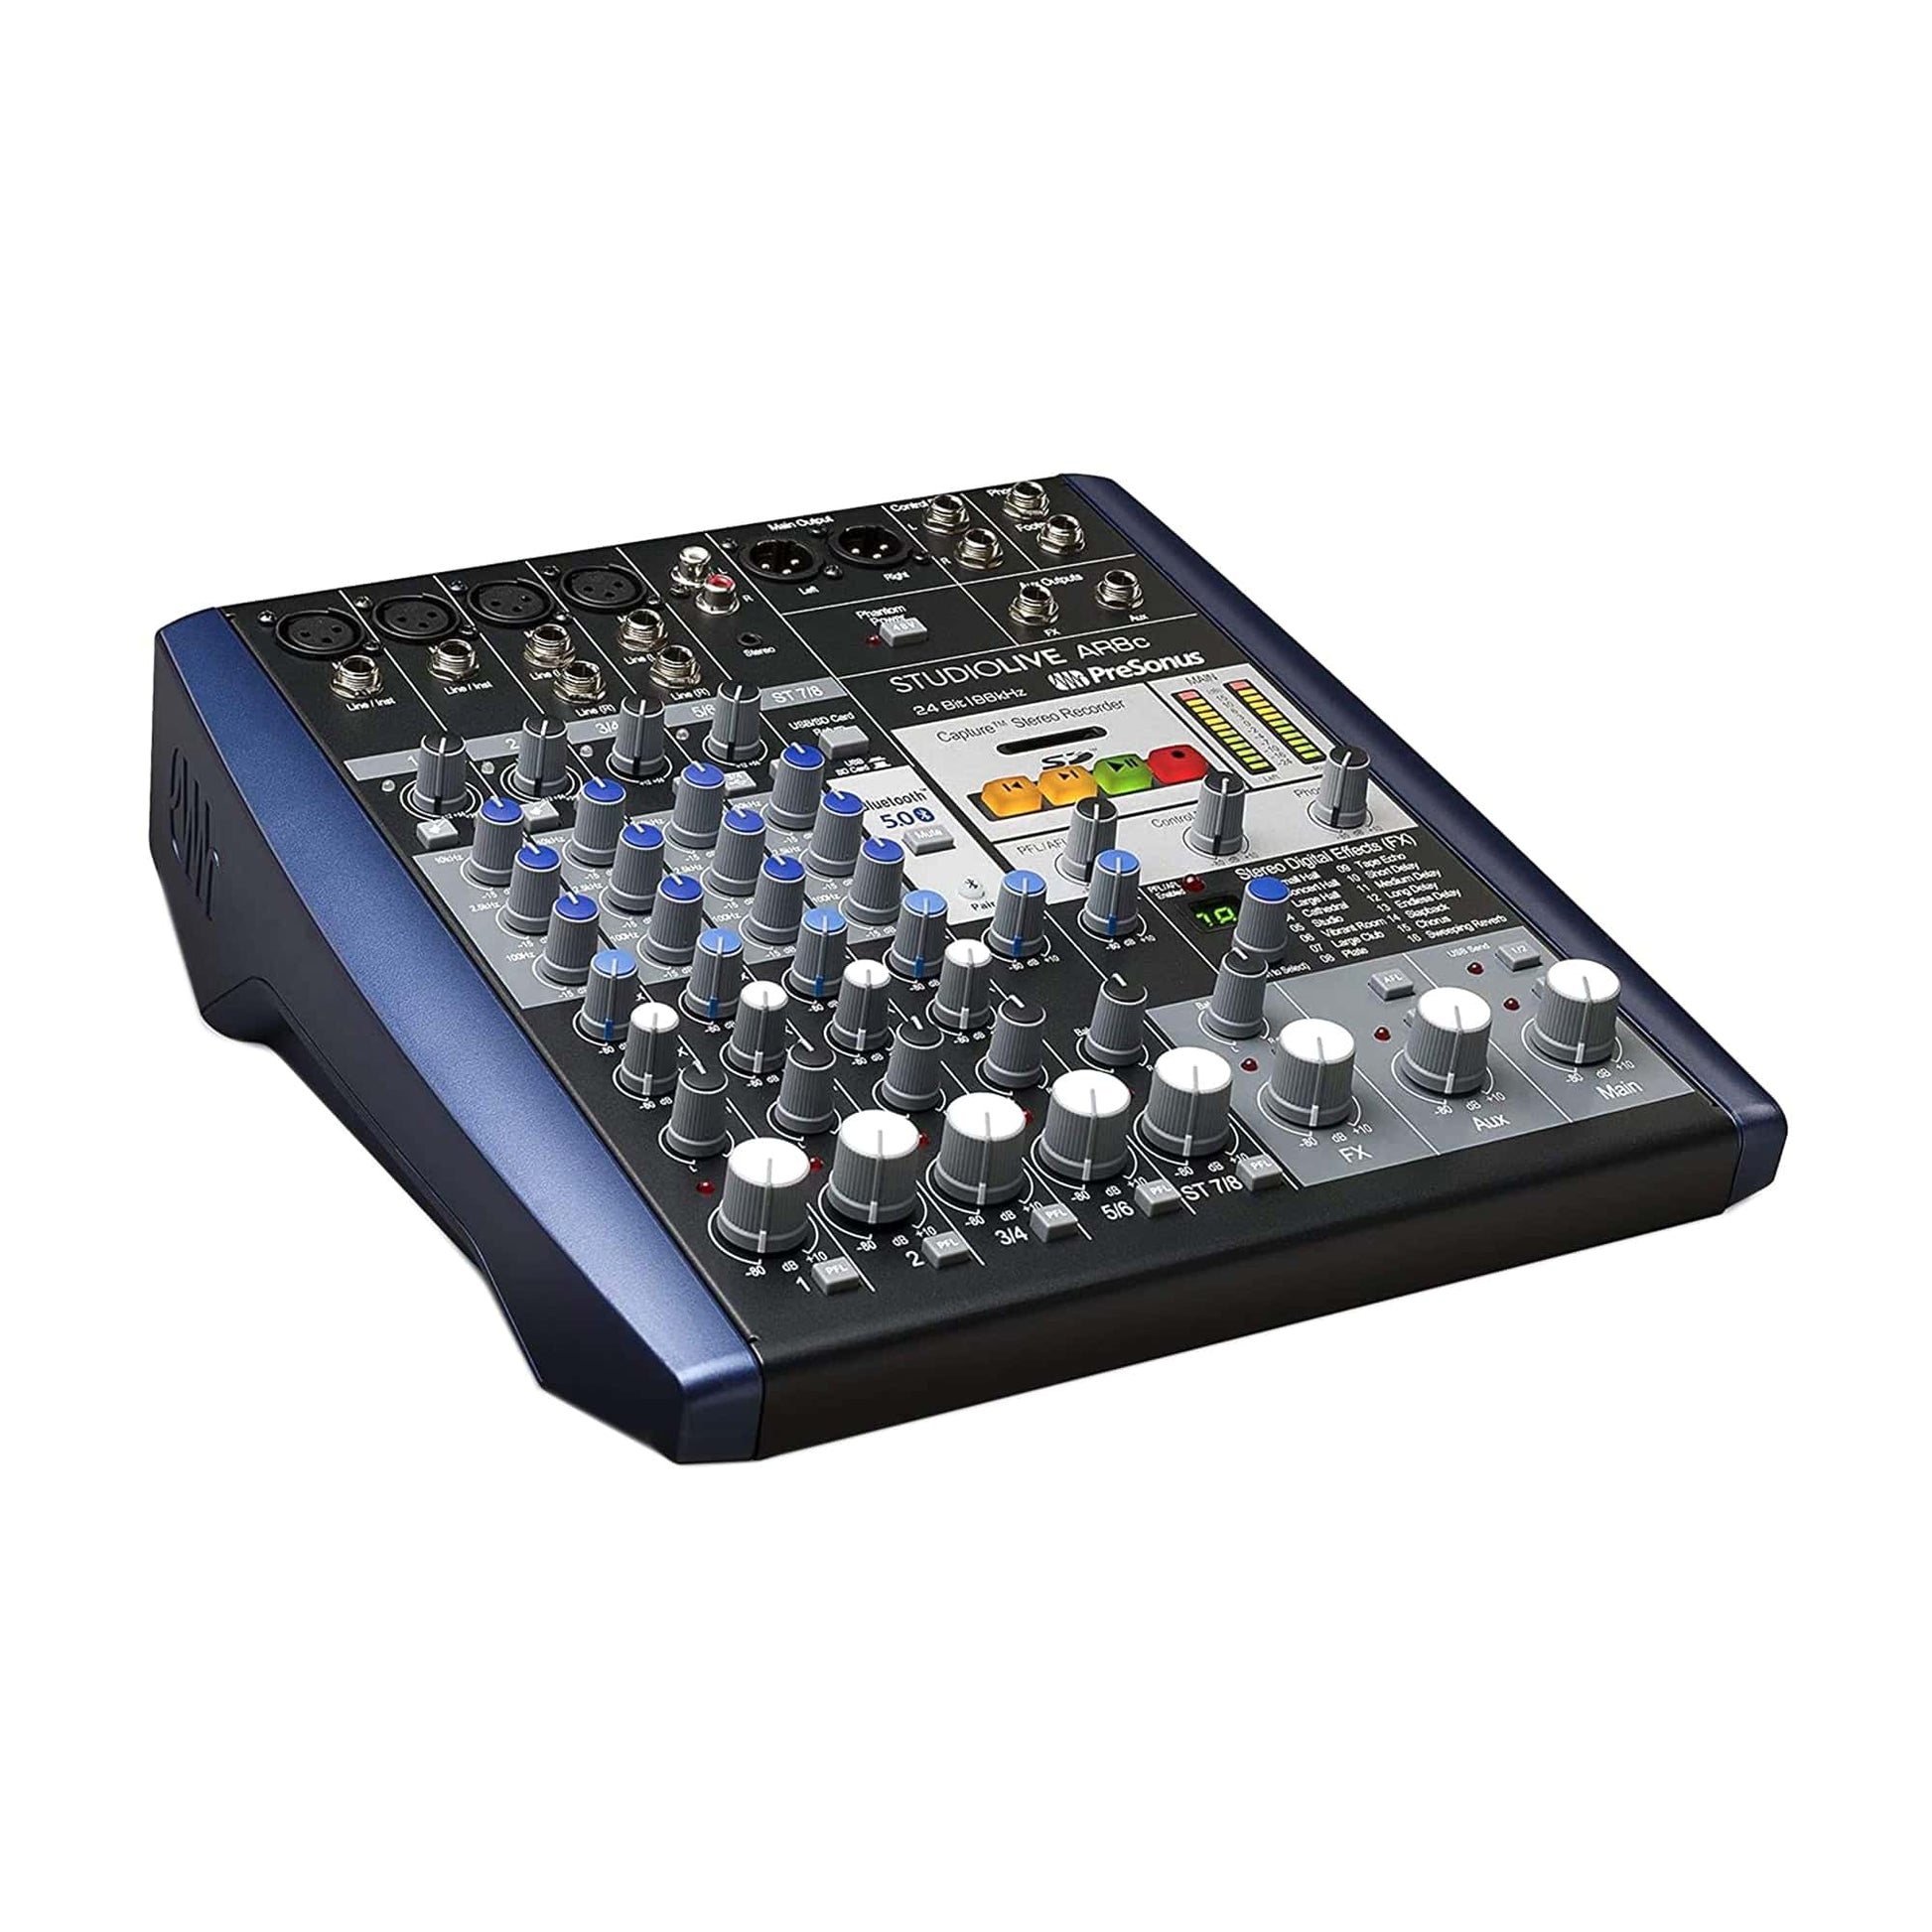 PreSonus StudioLive AR8c 8-Channel USB-C Digital/Analog Mixer Pro Audio / Mixers